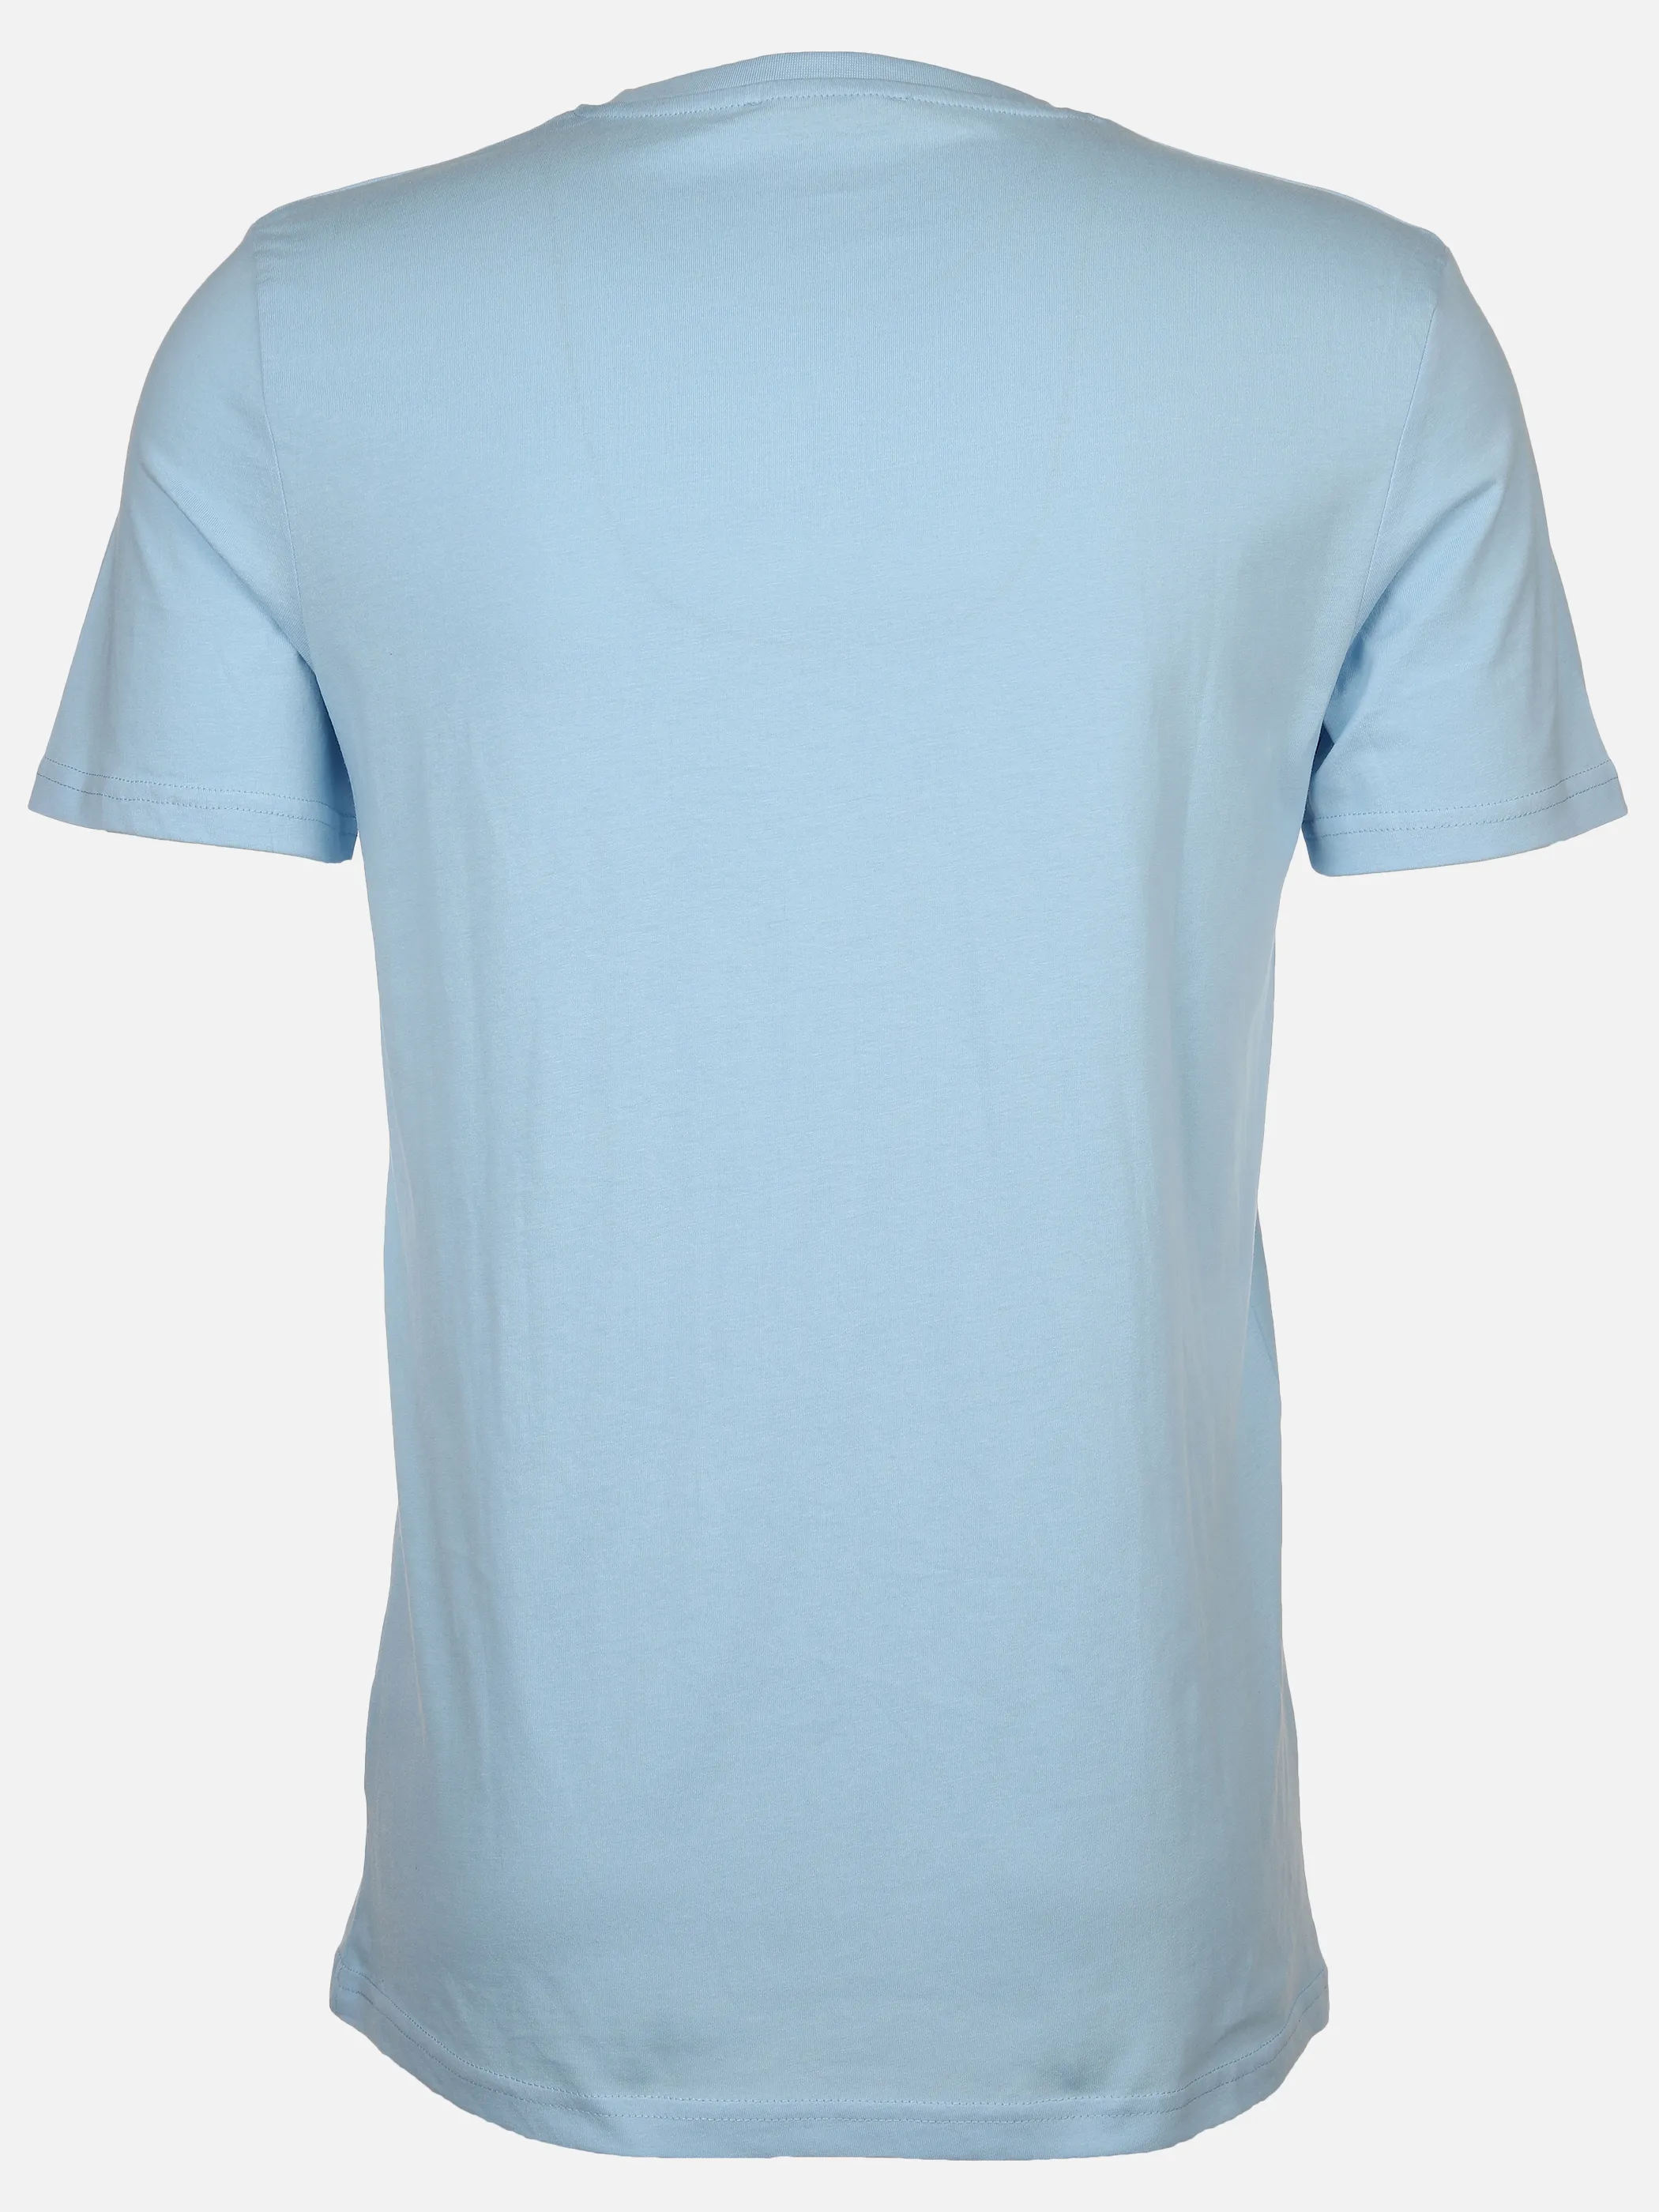 Harvey Miller He. T-Shirt 1/2 Arm Logo Blau 882848 LIGHT BLUE 2